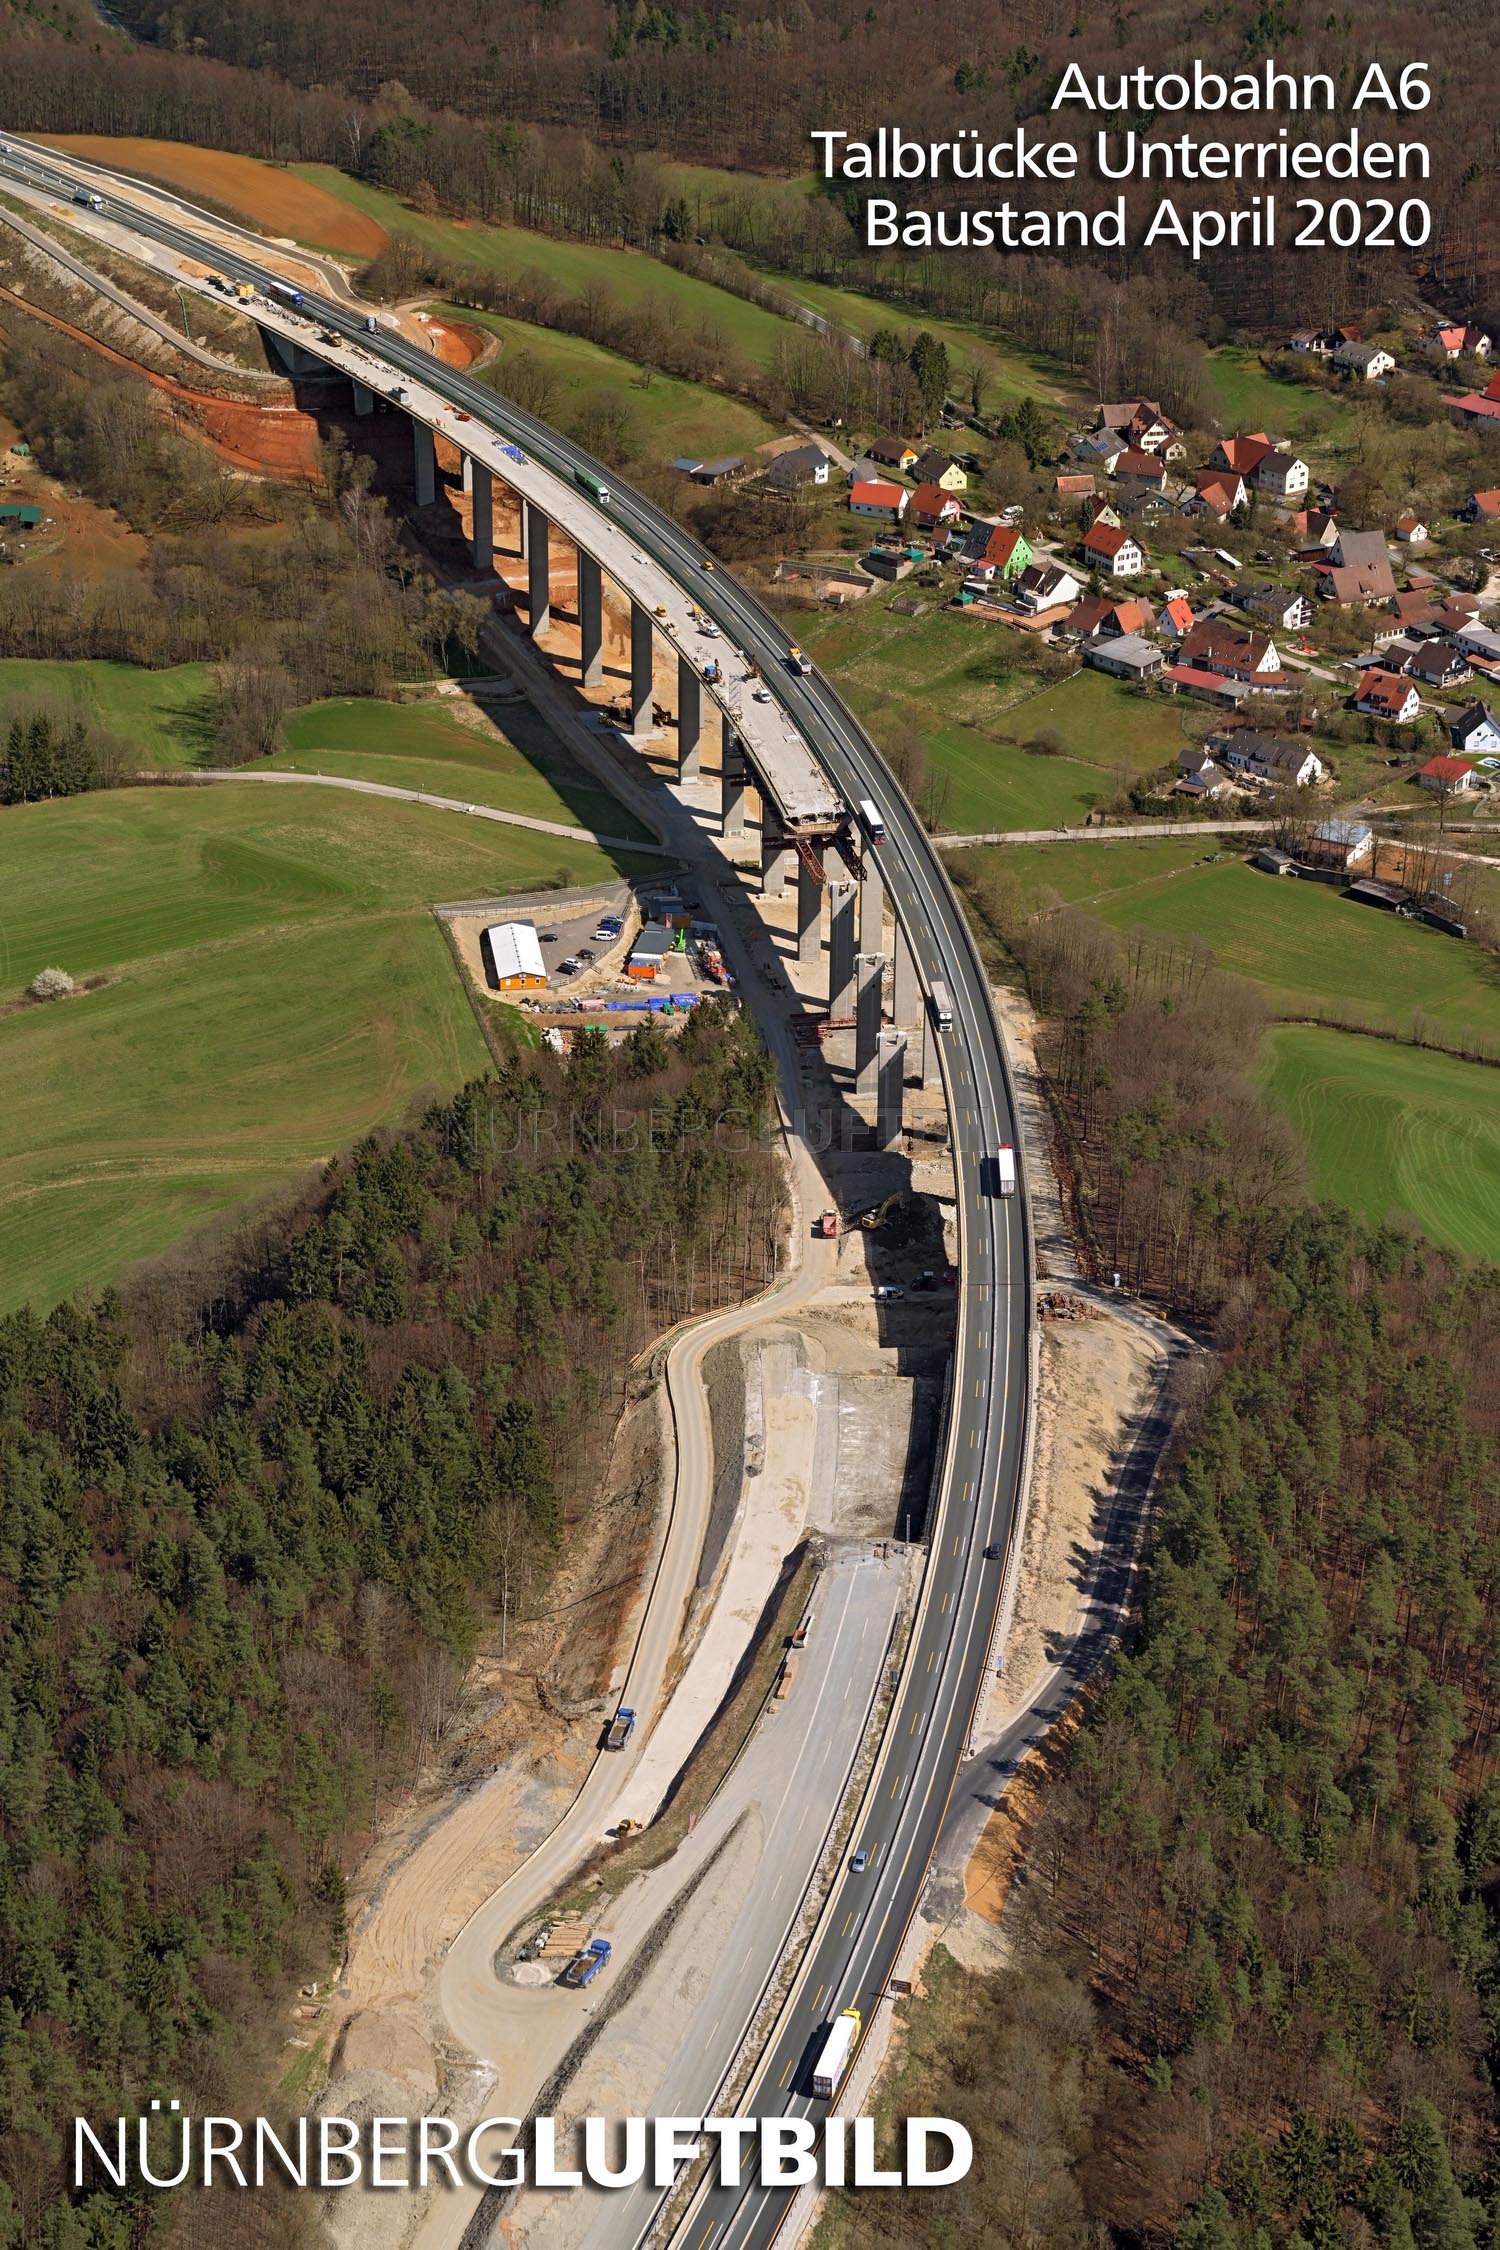 Autobahn A6, Talbrücke Unterrieden, Baustand April 2020